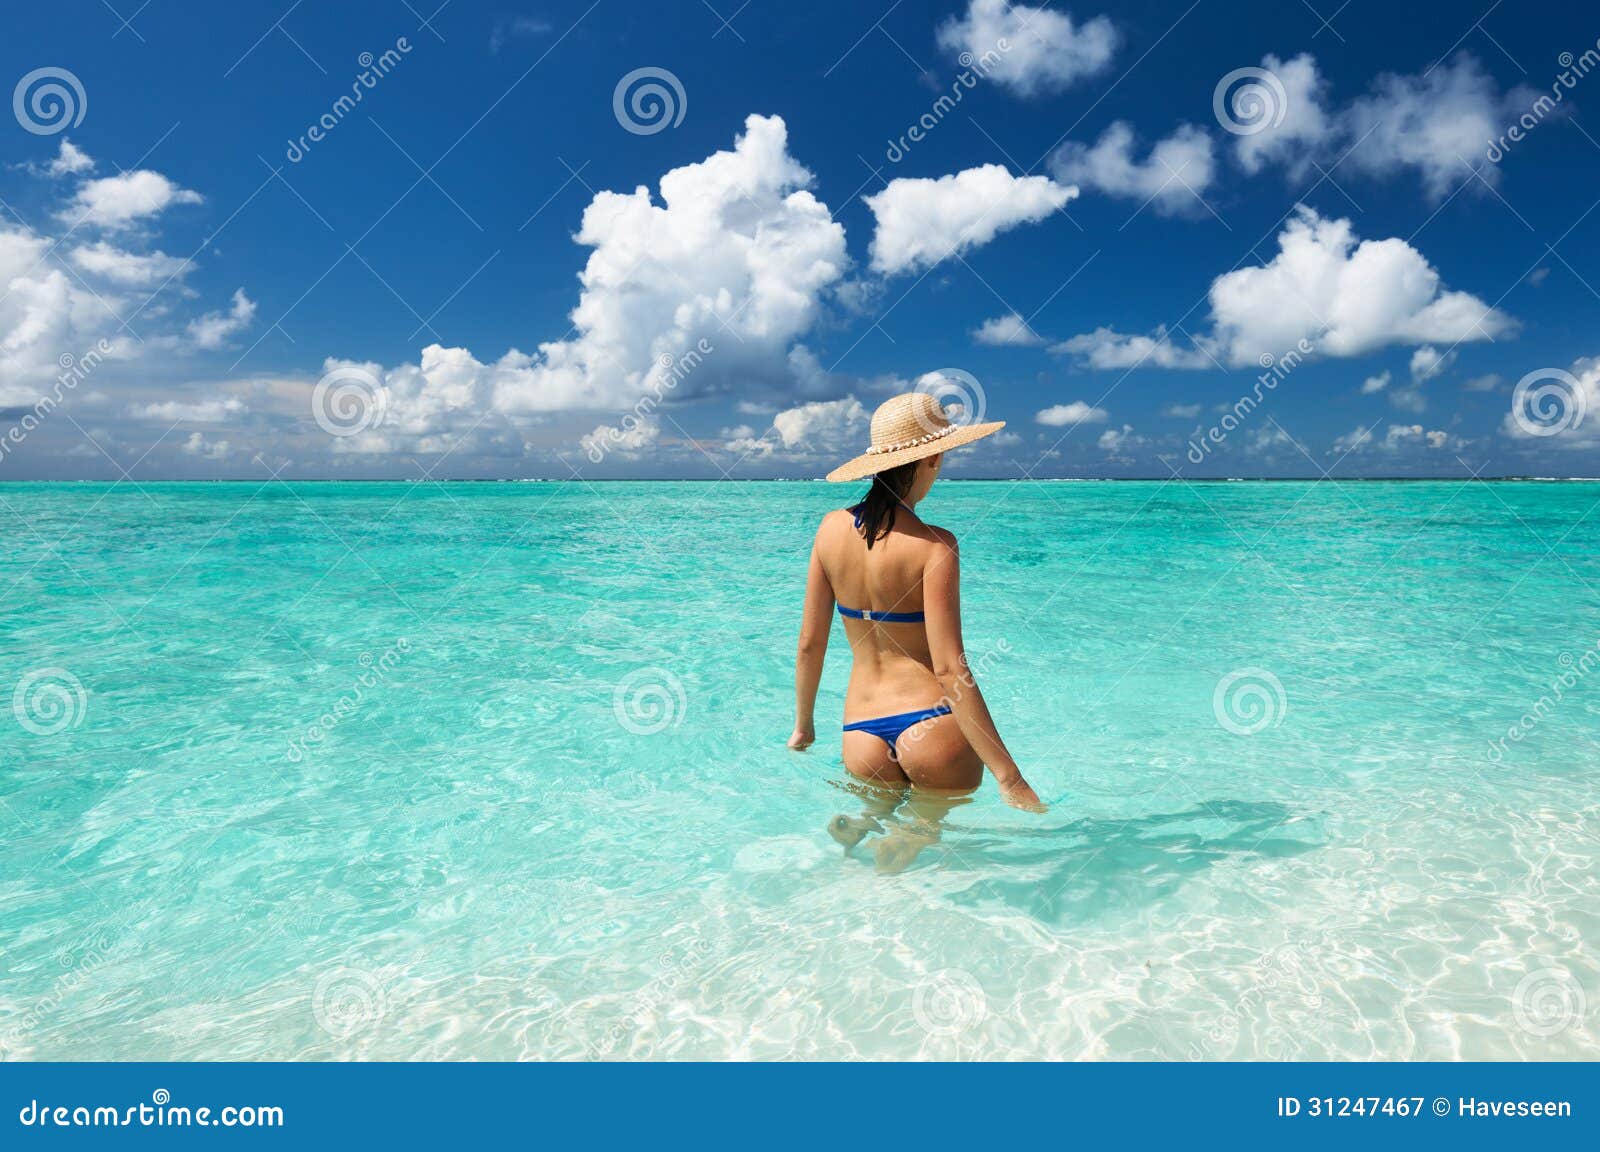 574 Woman Thong Bikini Beach Stock Photos photo photo photo